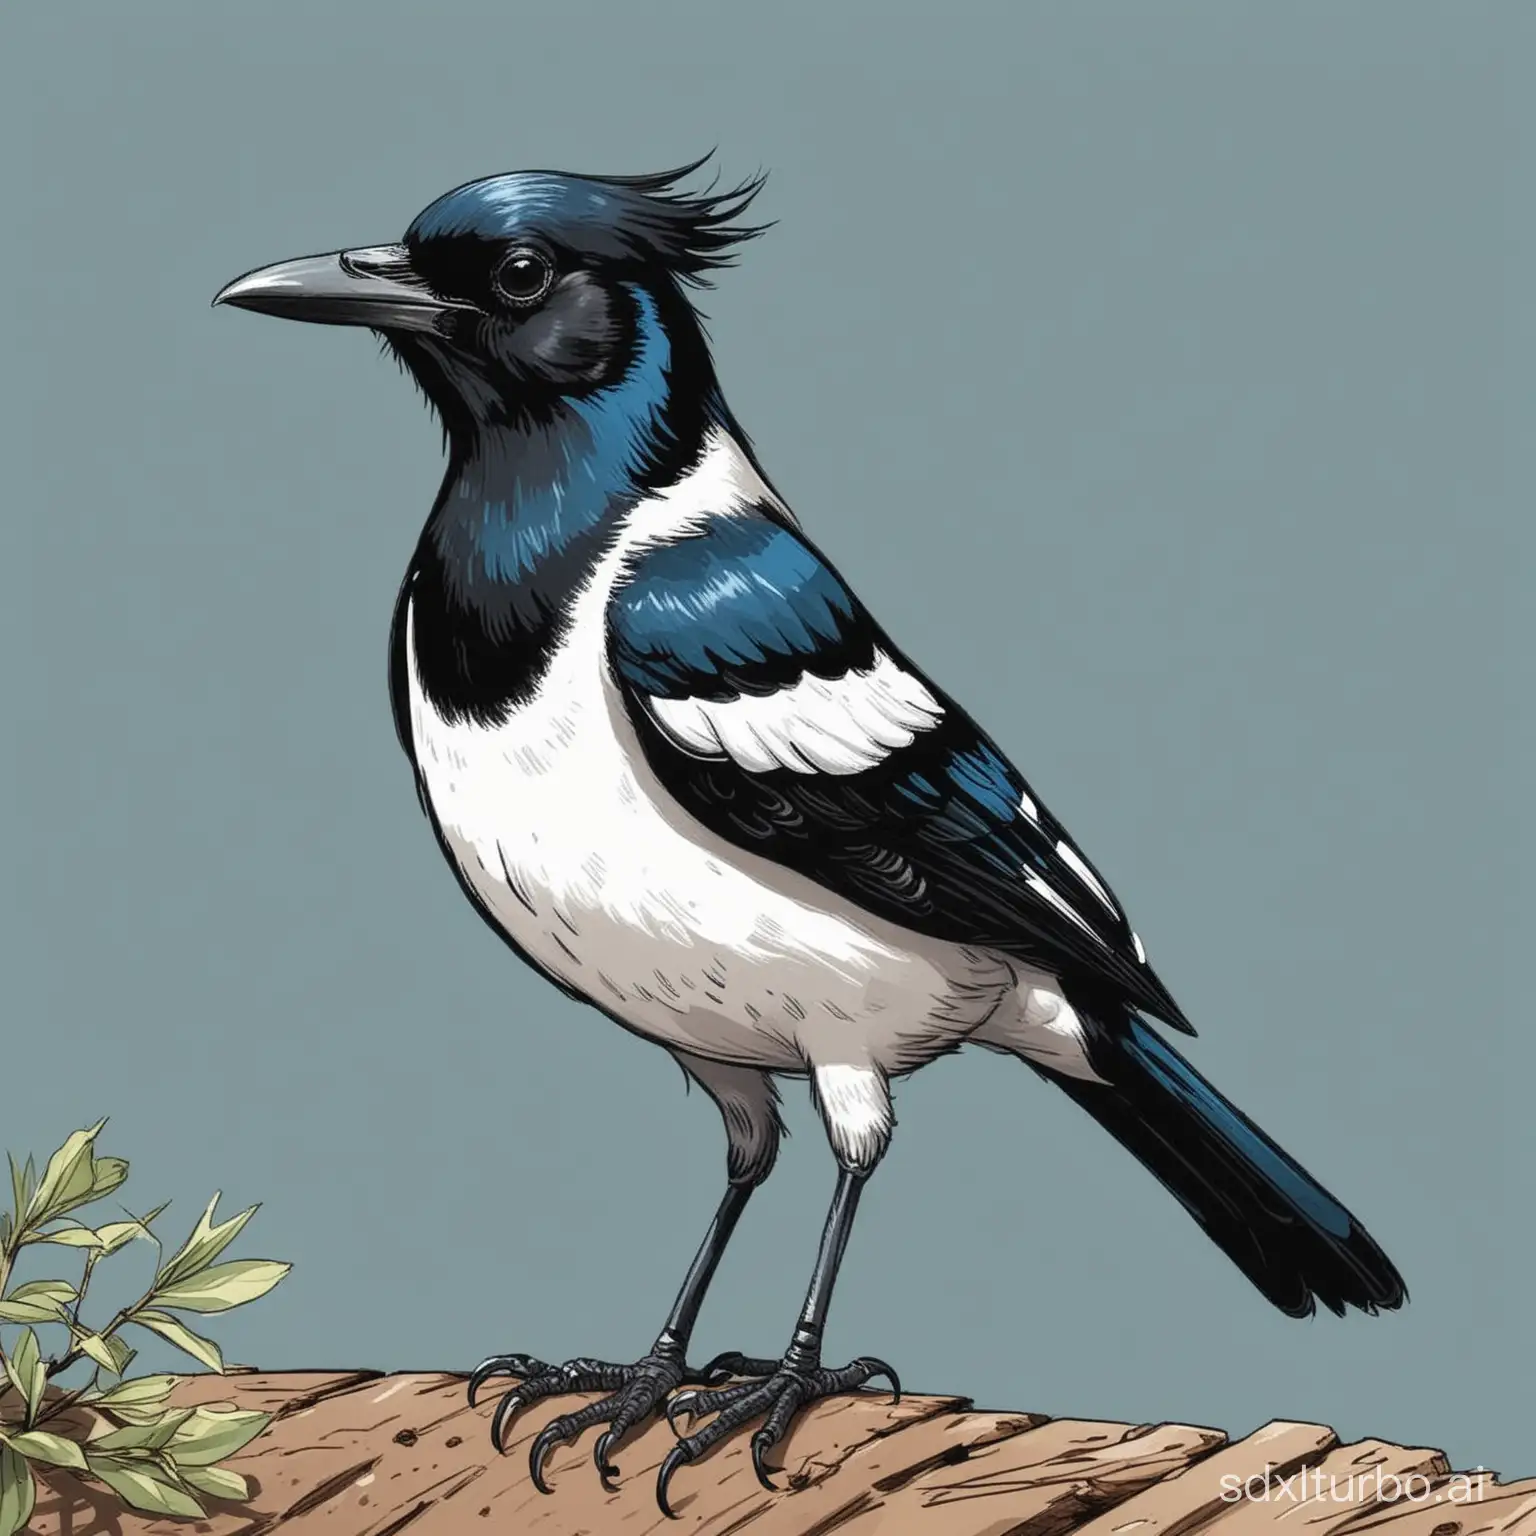 Cartoon-style Illustration of Magpies Cartoon-style Illustration of a Magpie